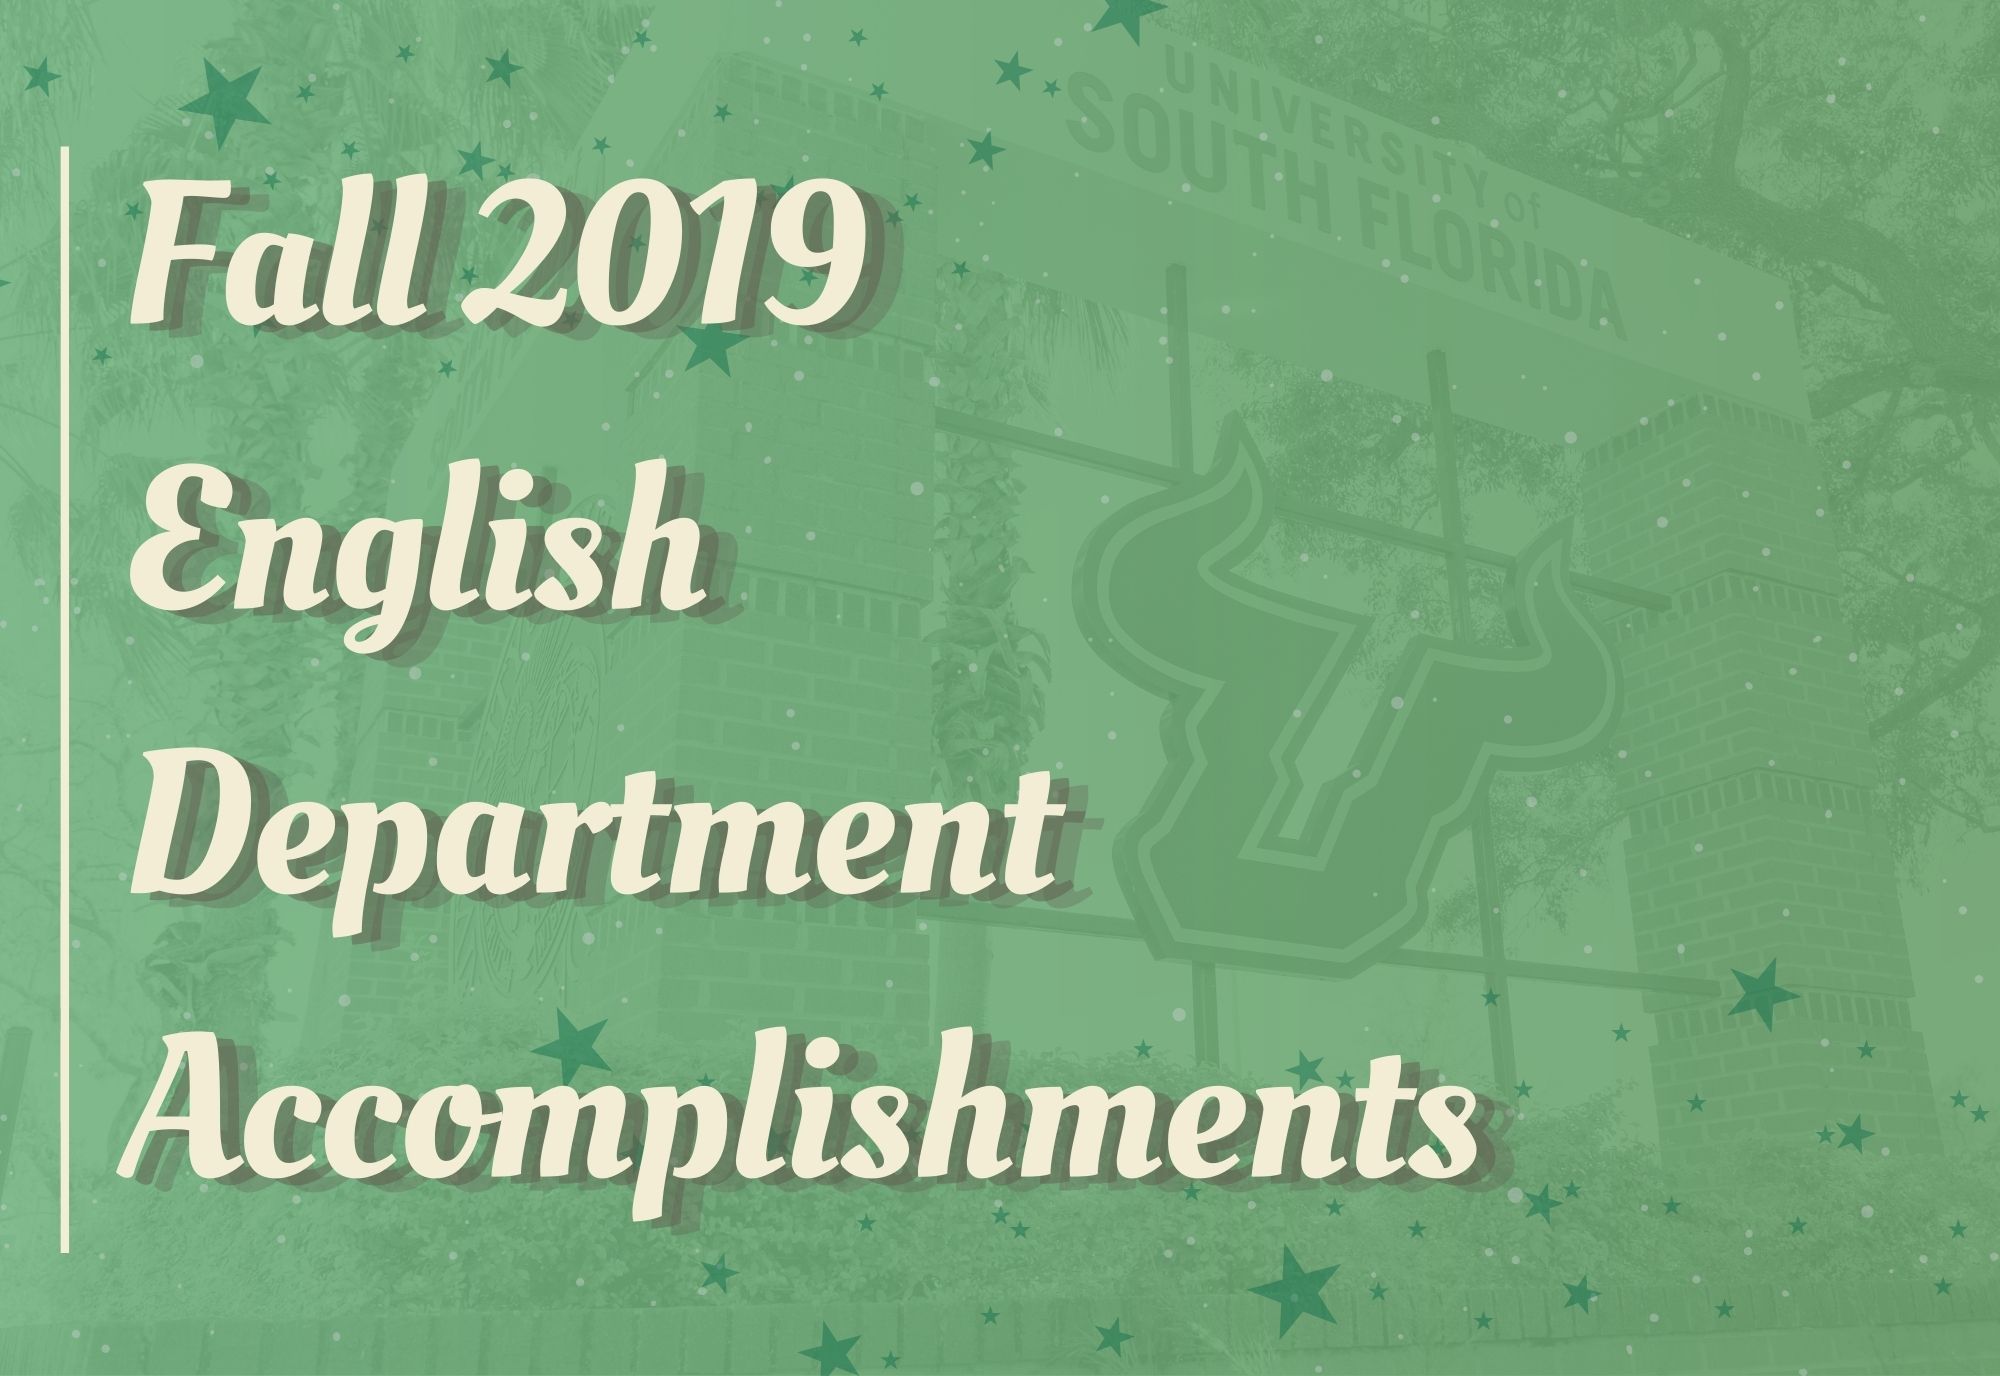 Fall 2019 English Department Accomplishments